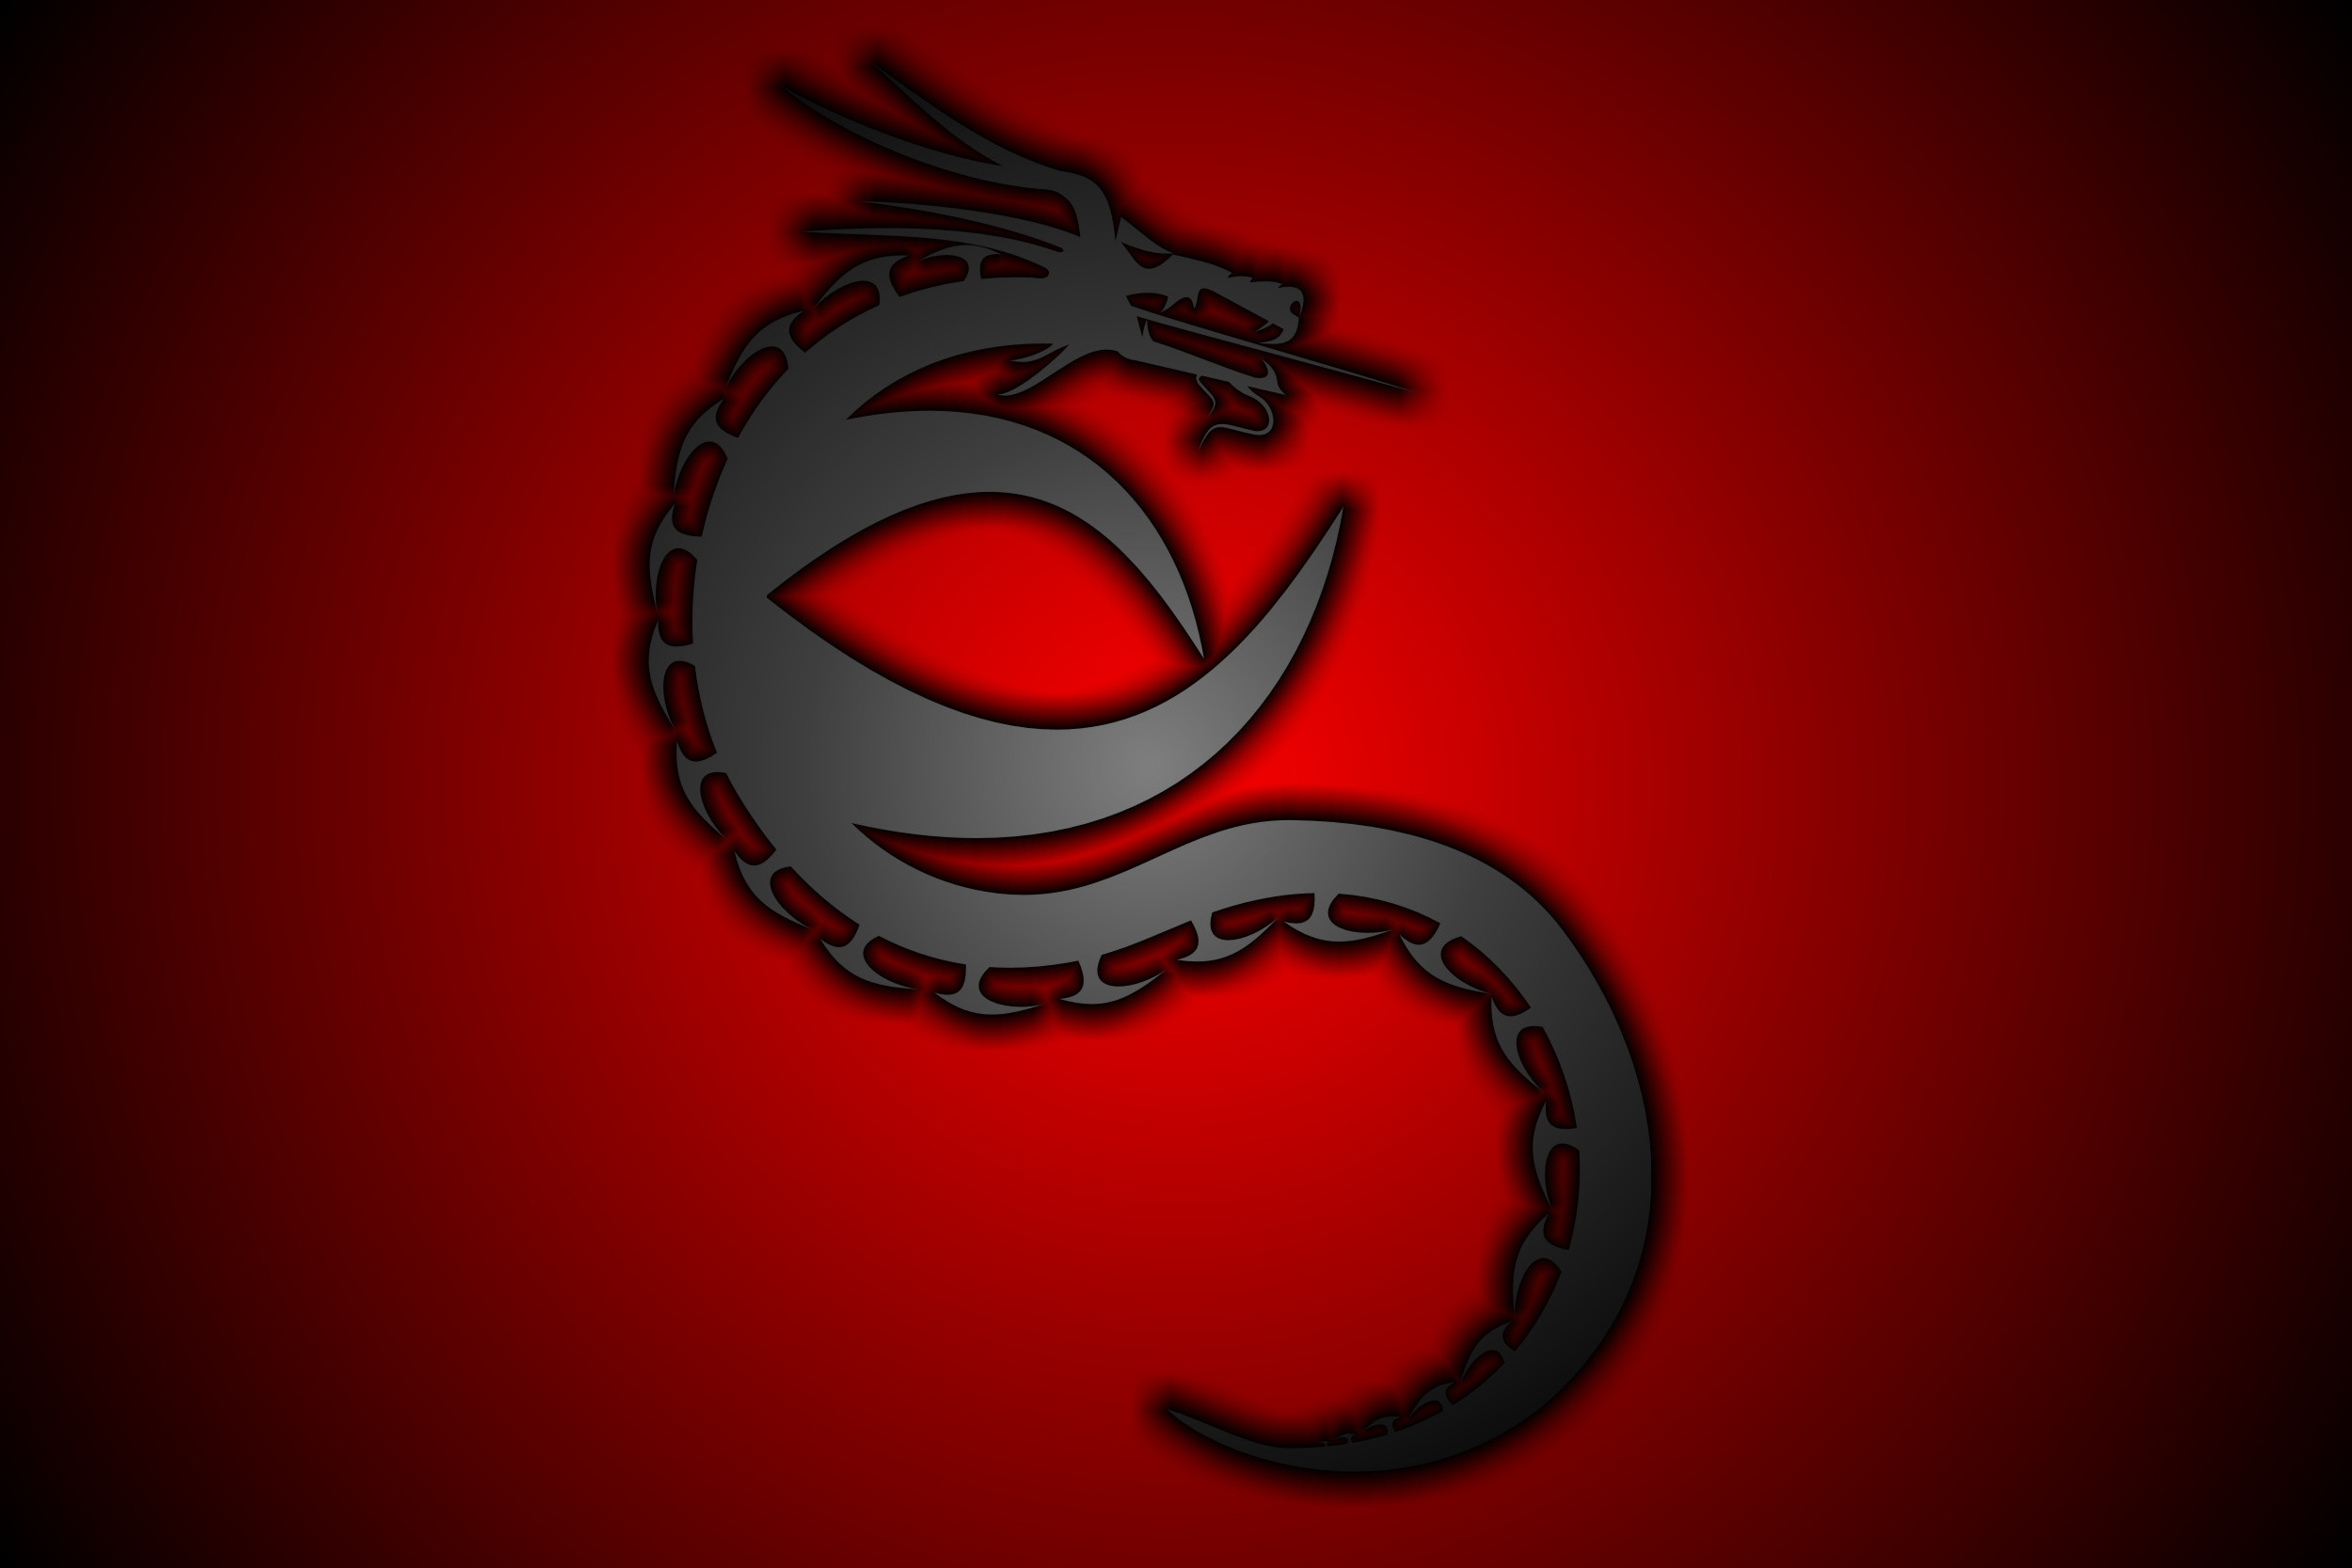 Dragon wallpaper – Google keress Phone Pinterest Red dragon and Dragons